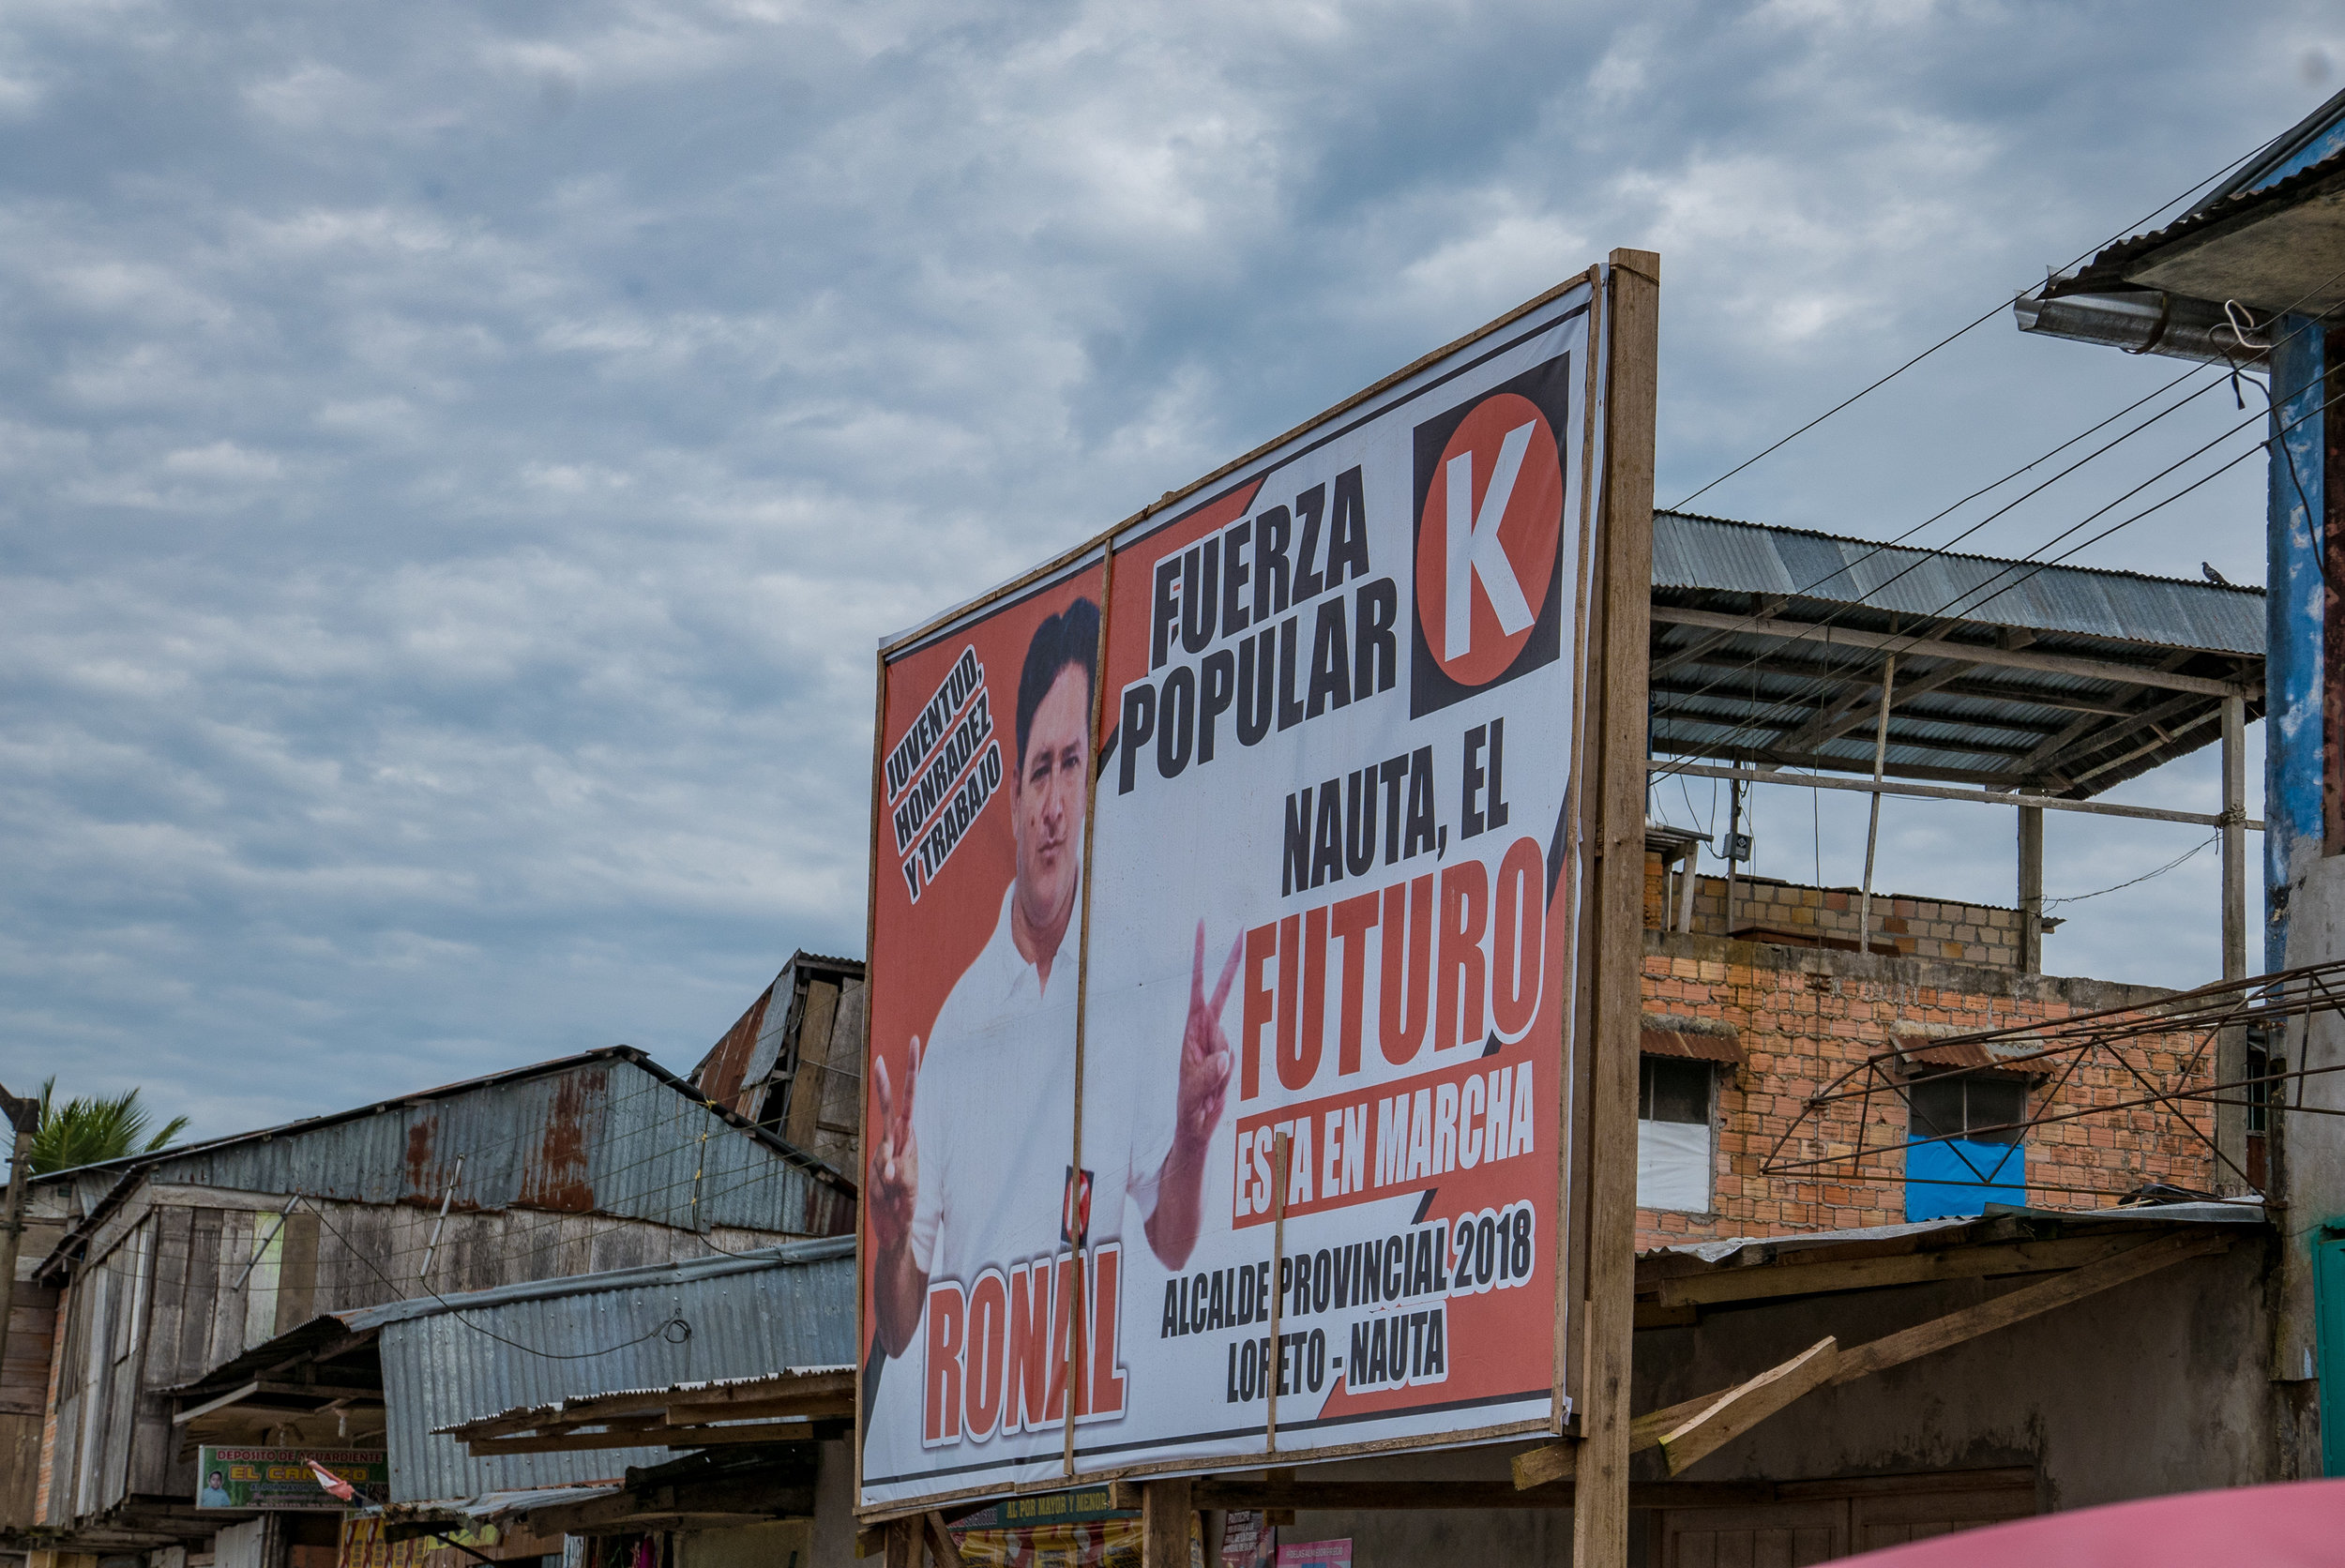 Great election ads Peru style